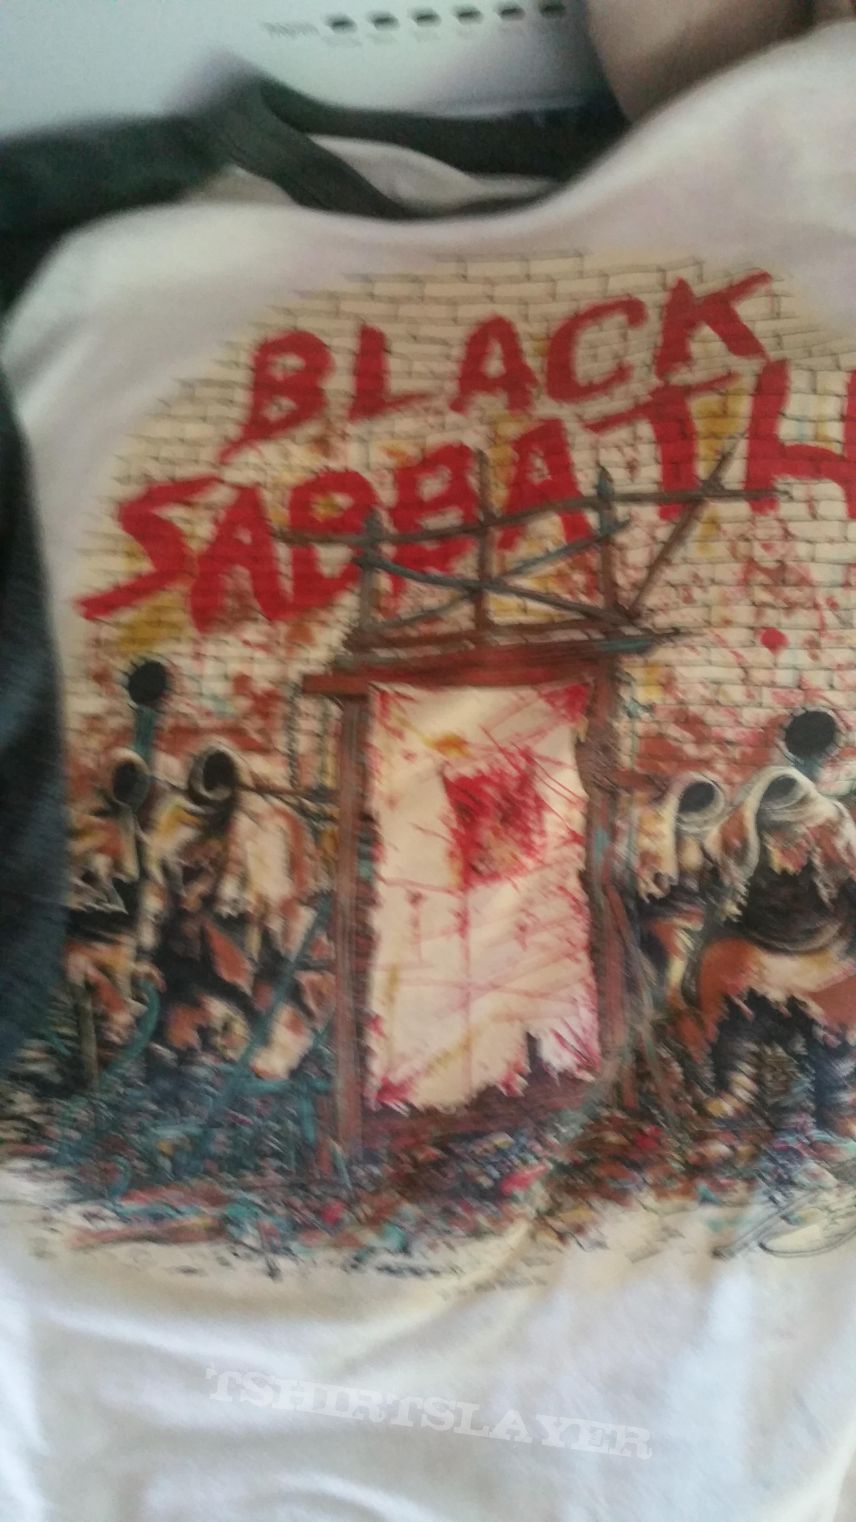 Black Sabbath &quot;Mob Rules&quot; tour 3/4 sleeve